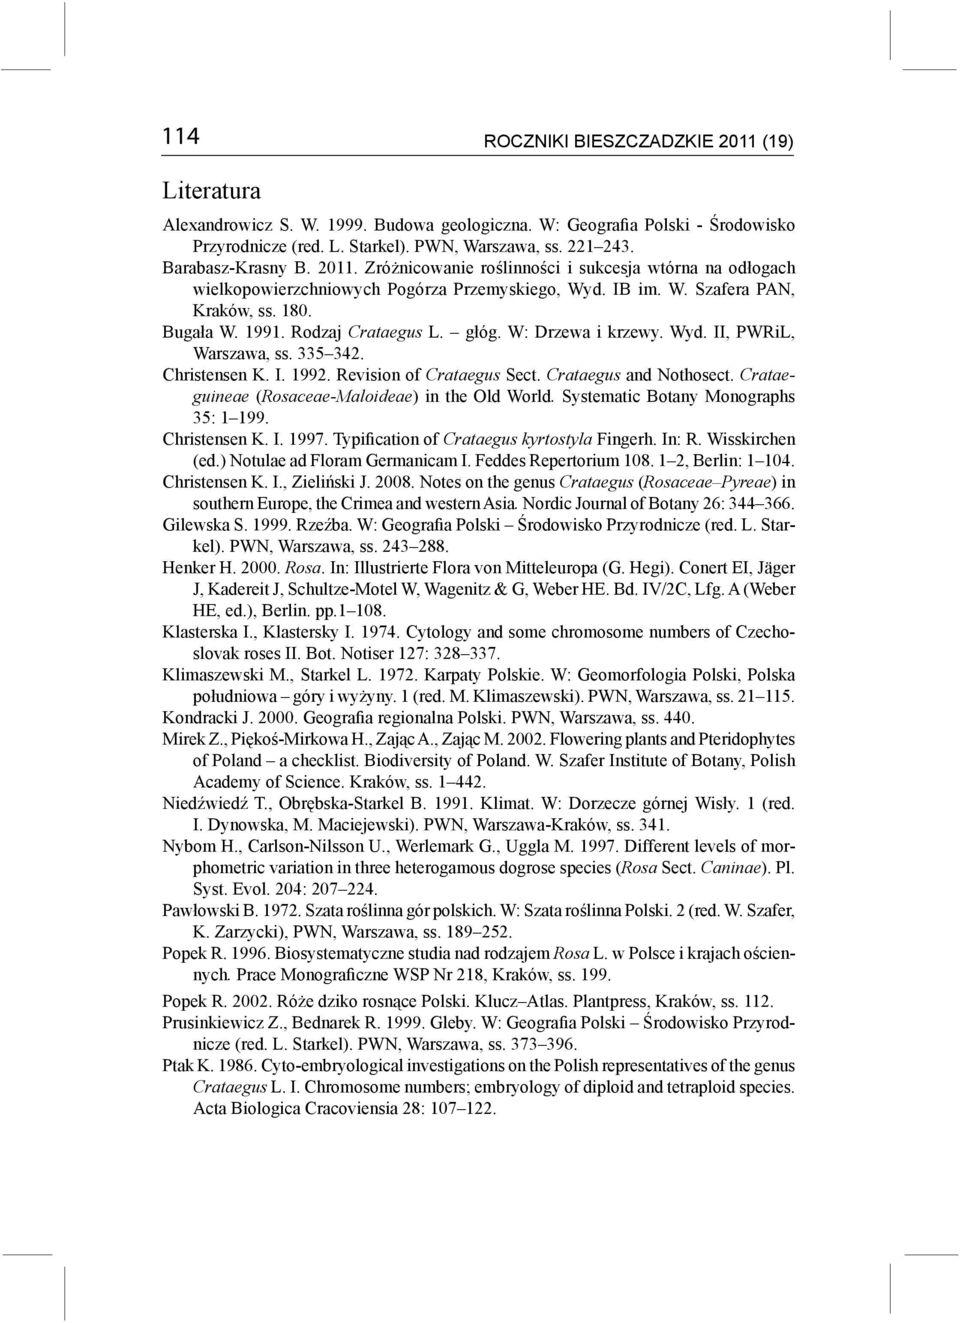 Rodzaj Crataegus L. głóg. W: Drzewa i krzewy. Wyd. II, PWRiL, Warszawa, ss. 335 342. Christensen K. I. 1992. Revision of Crataegus Sect. Crataegus and Nothosect.